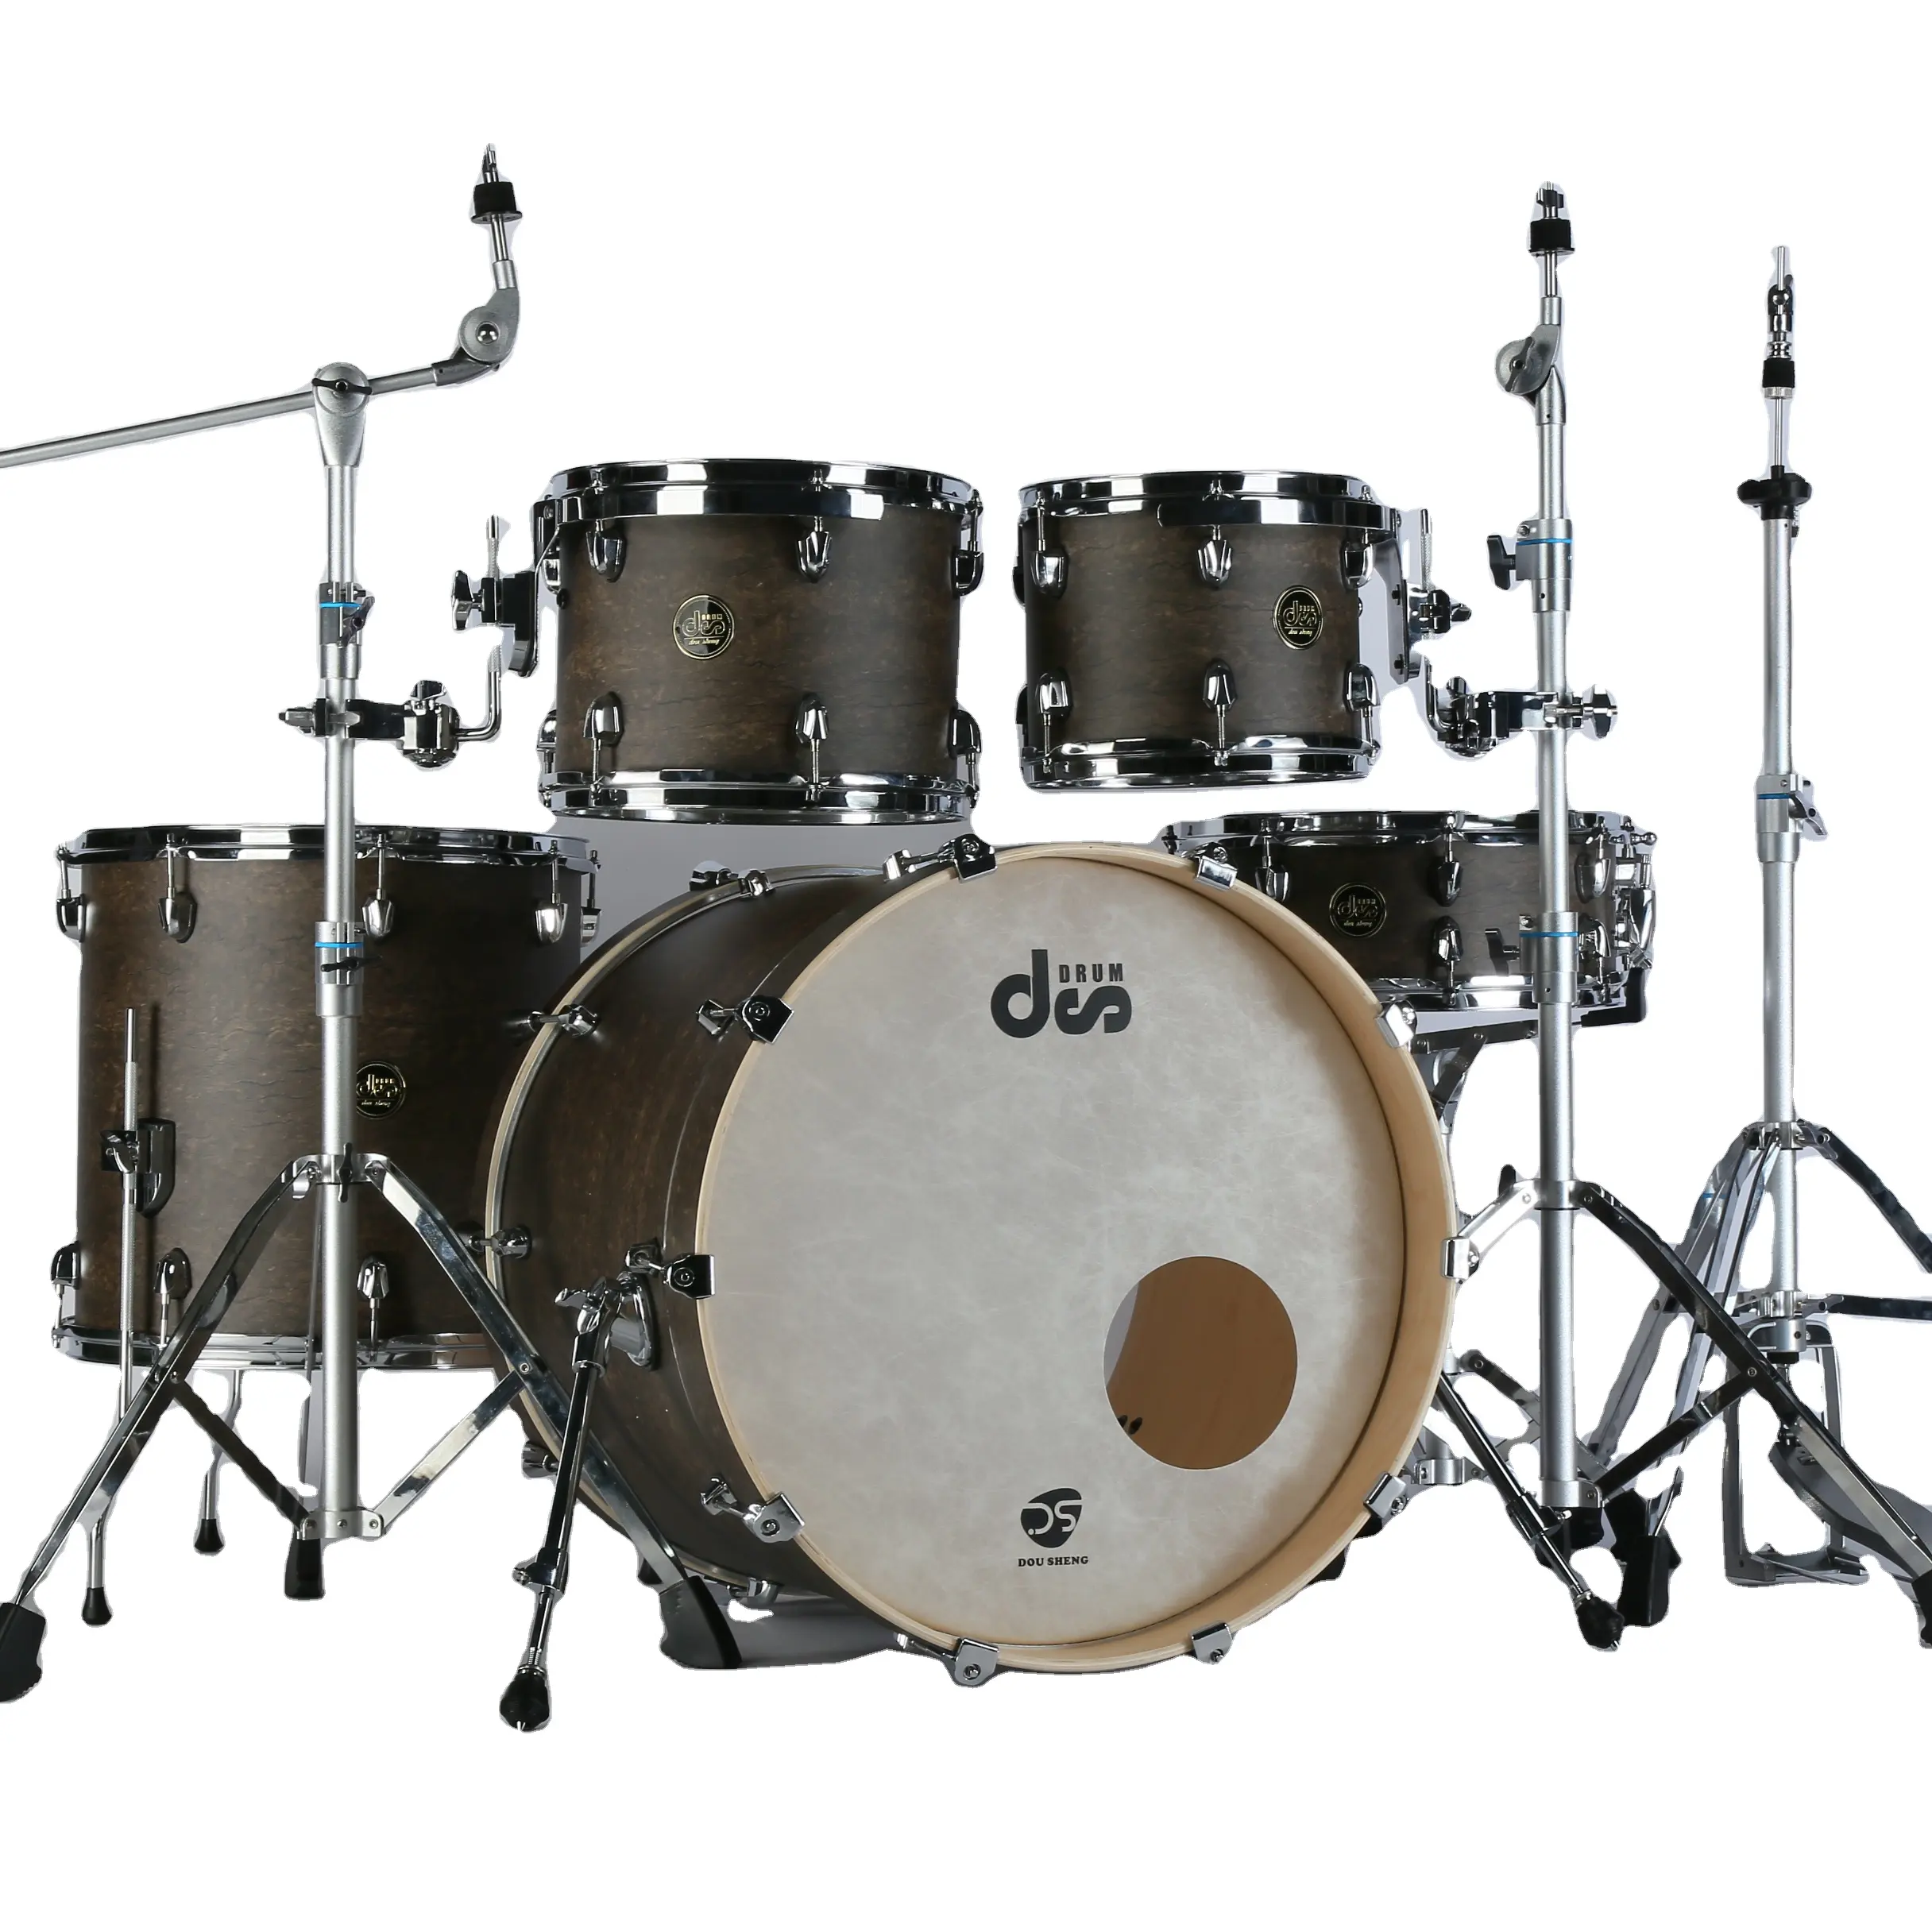 Customizable Buy Professional Level Jazz Drum Set Musical Instrument Professional Drum Kit